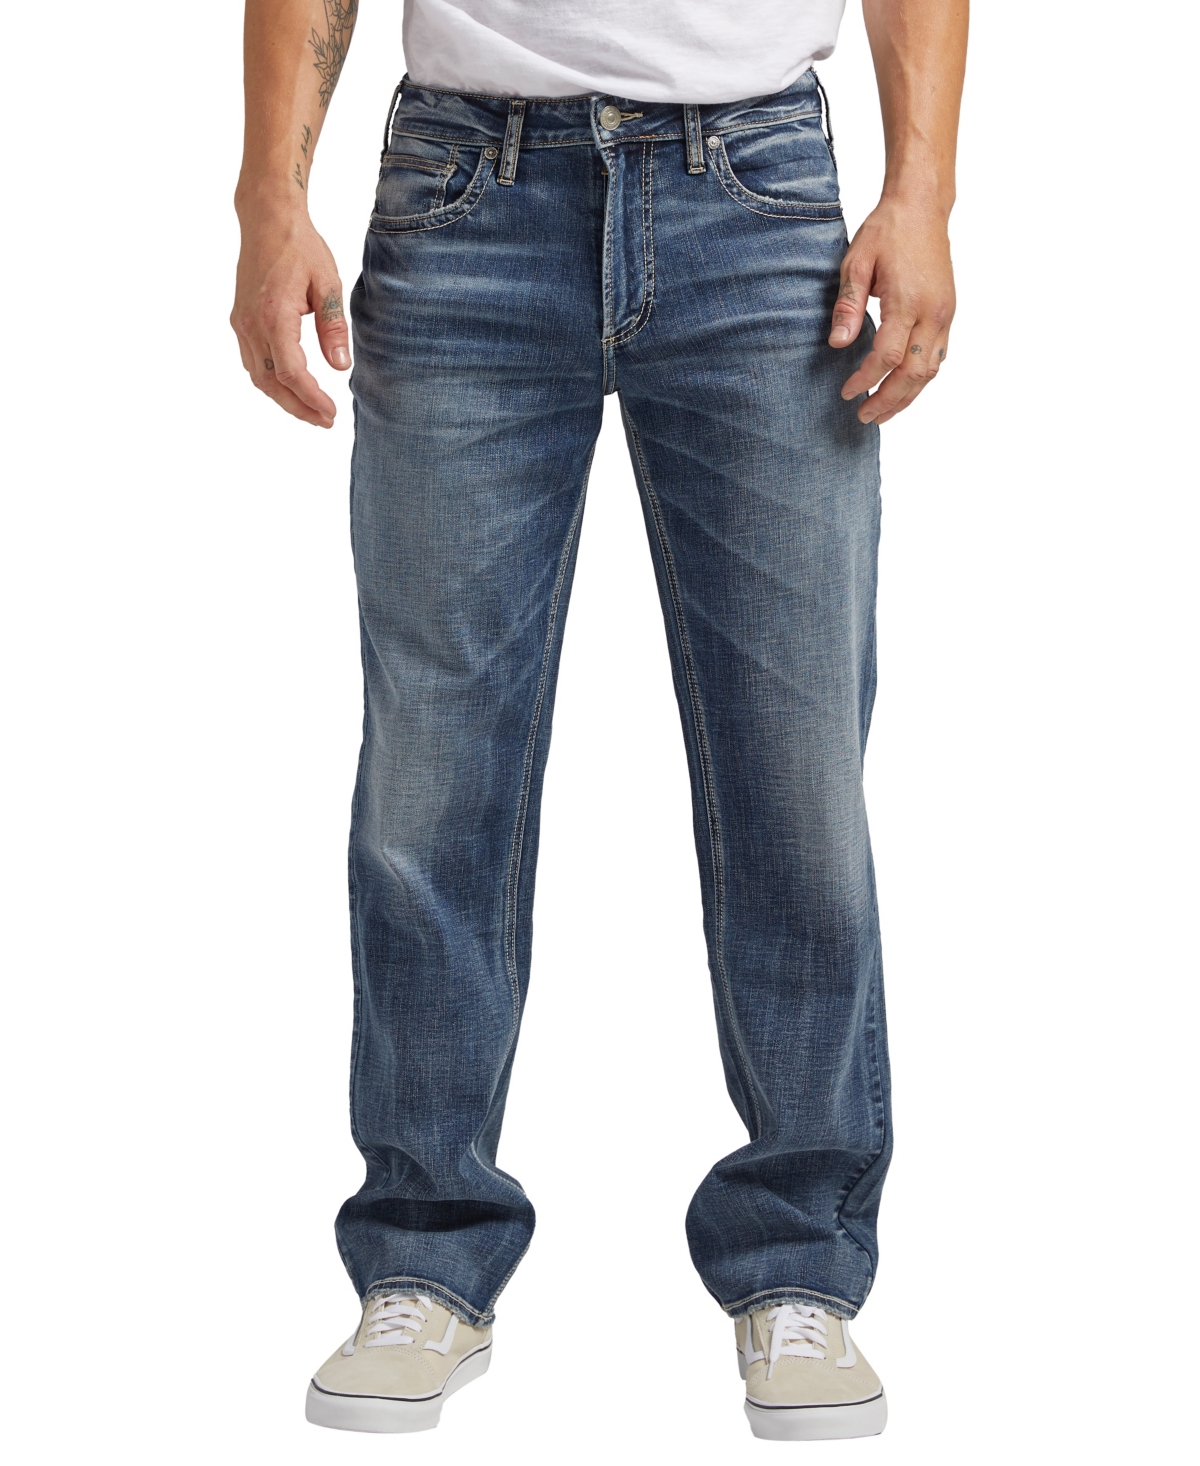 Silver Jeans Co. Men's Grayson Classic Fit Straight Leg Jeans In Indigo